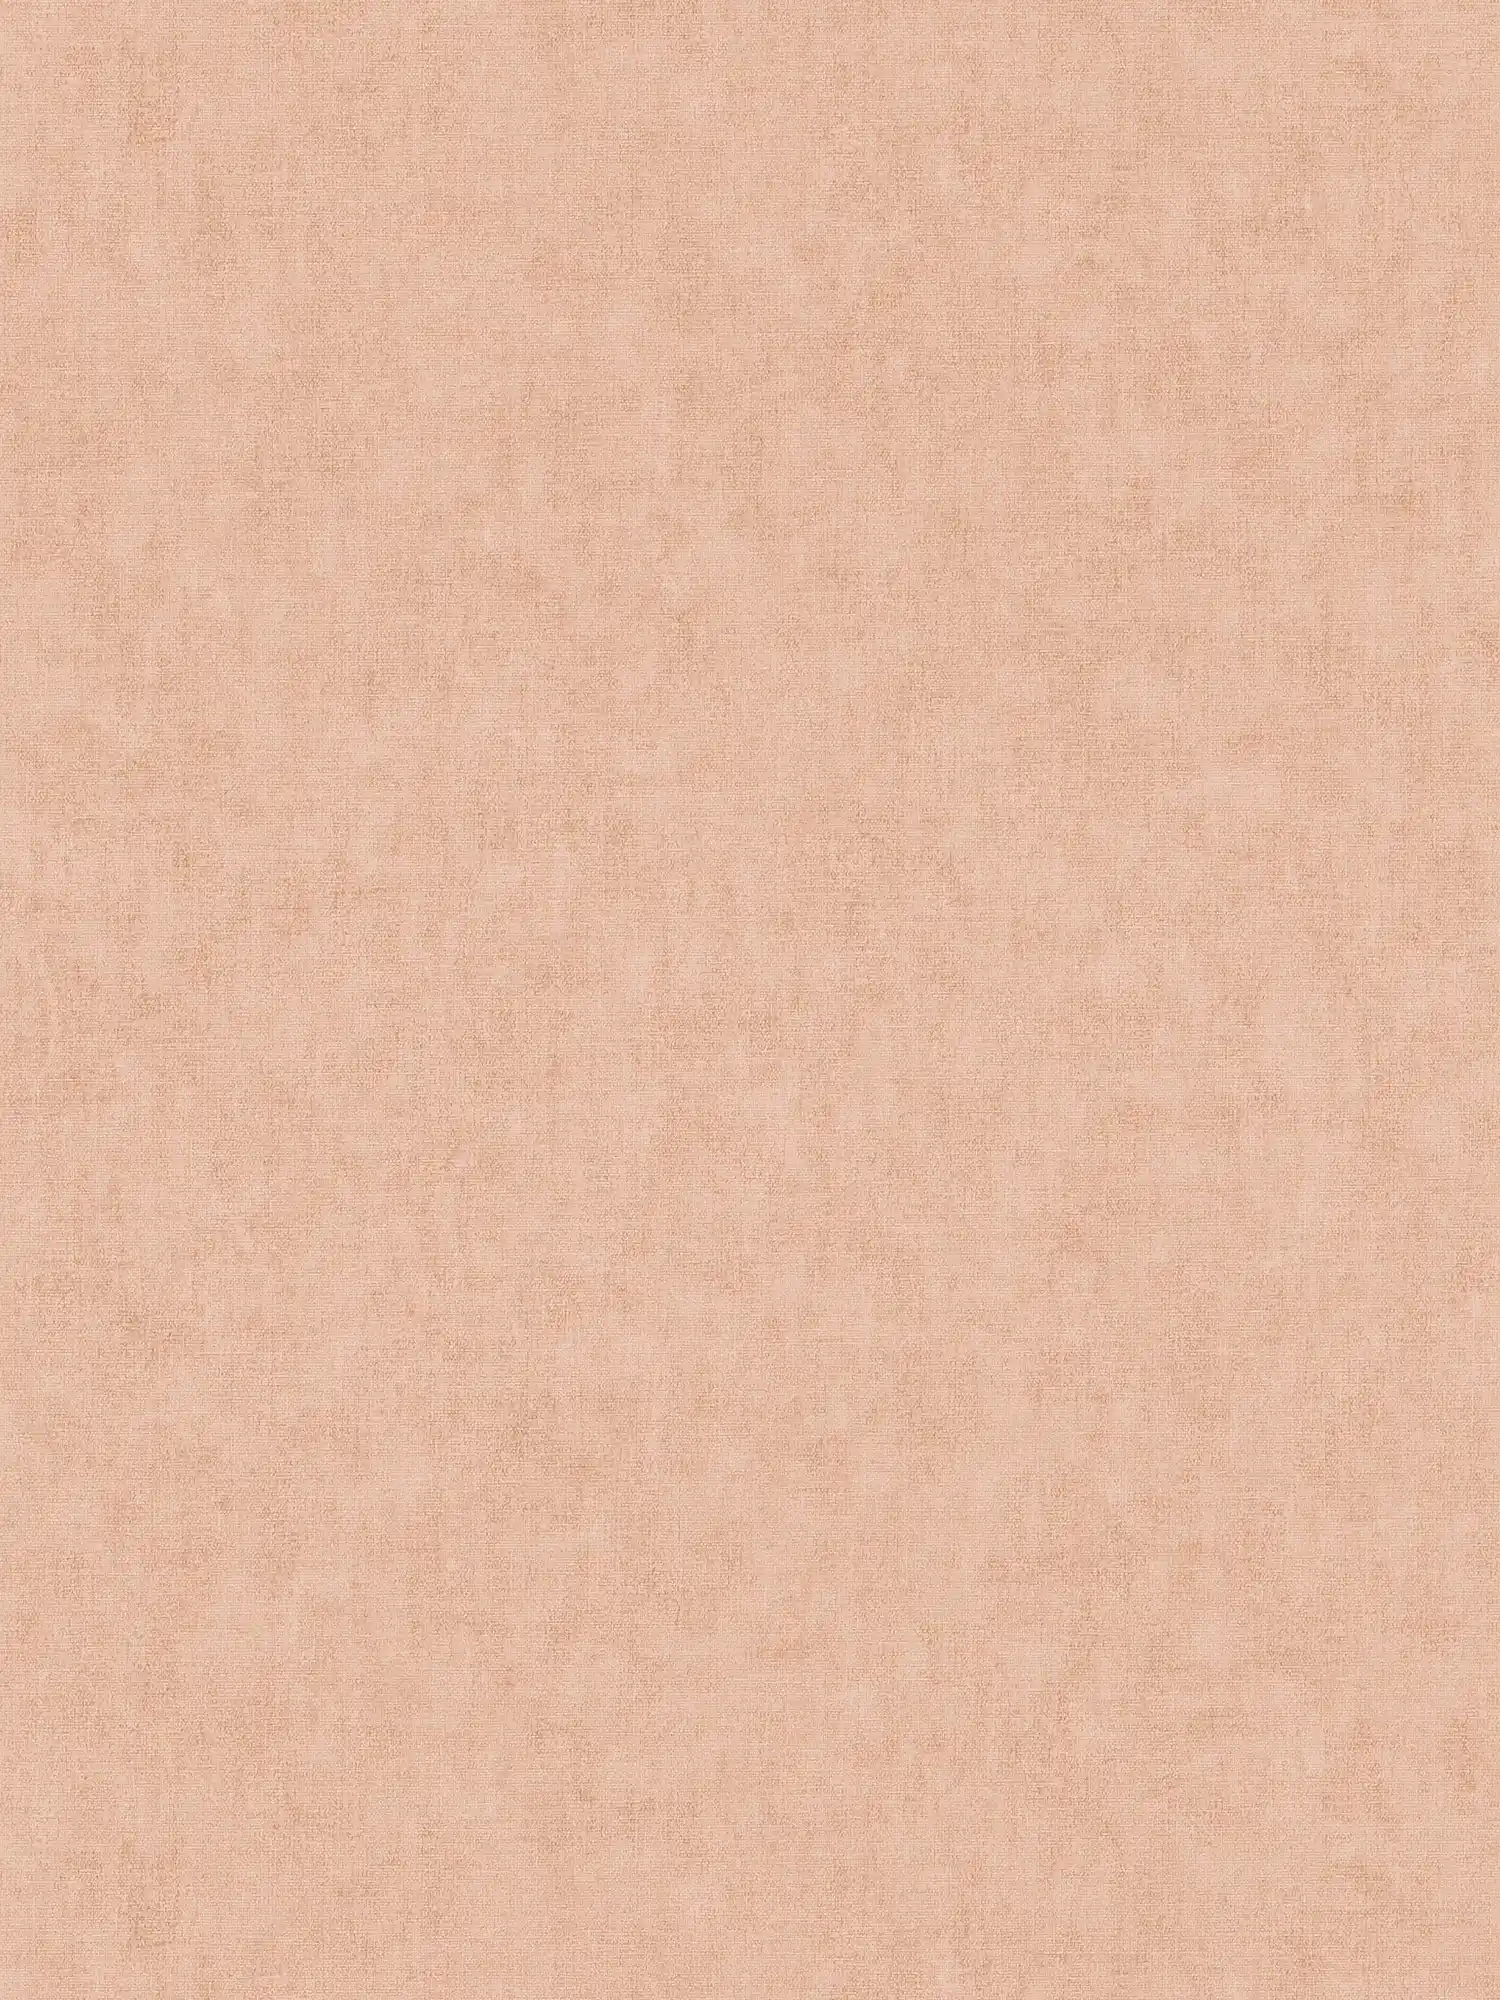 Wallpaper plain, linen look & Scandinavian style - pink, orange
